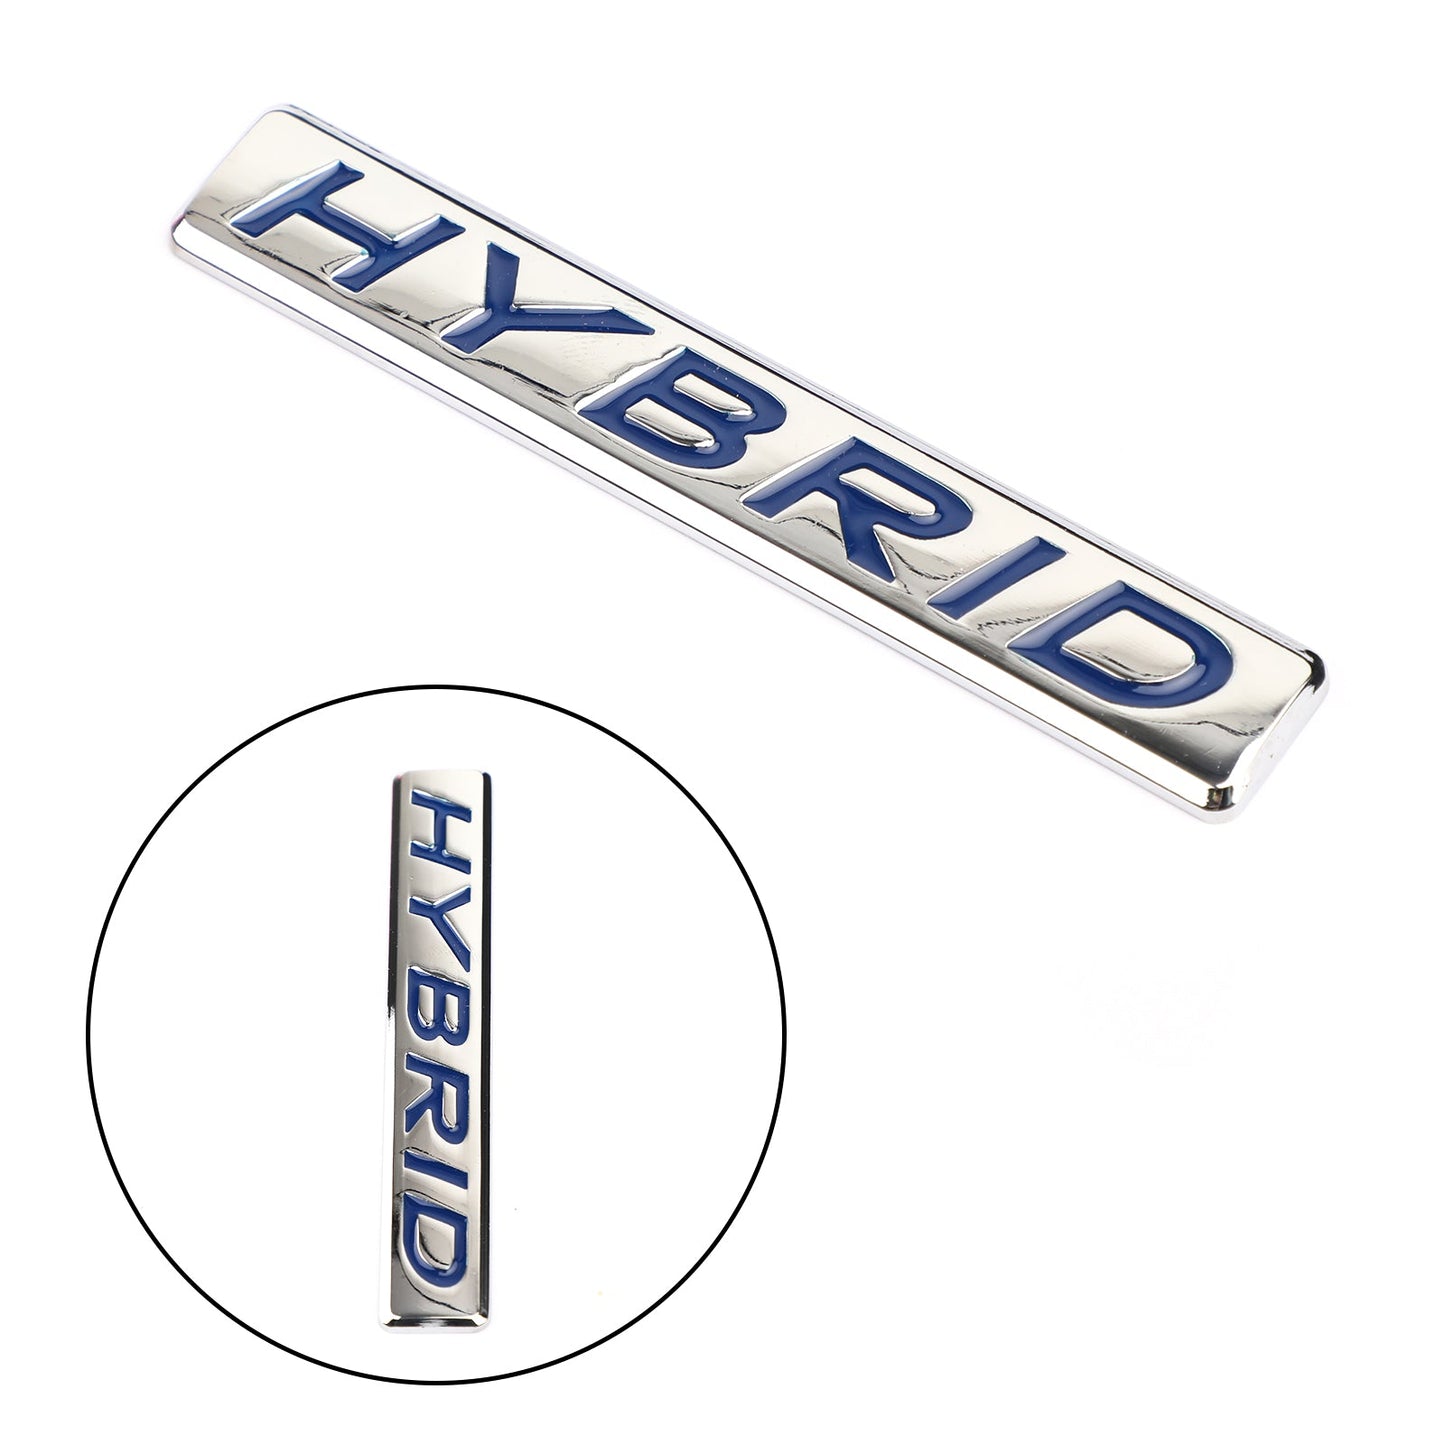 1PC 3D HYBRID Words Car Sticker Metal Emblem Rear Car Trunk Badge